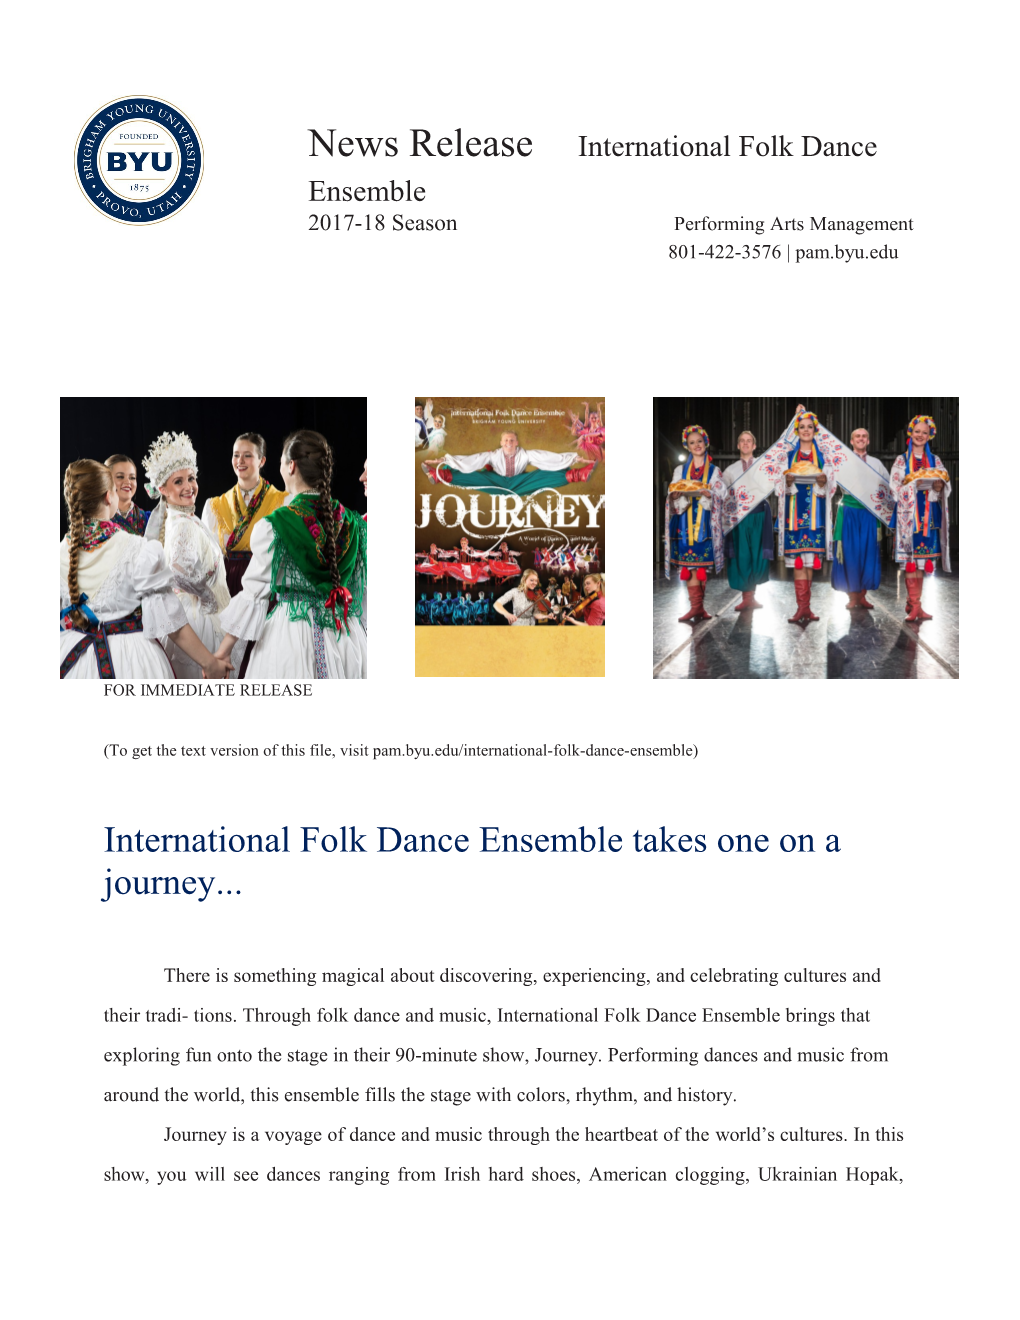 International Folk Dance Ensemble Takes One on a Journey